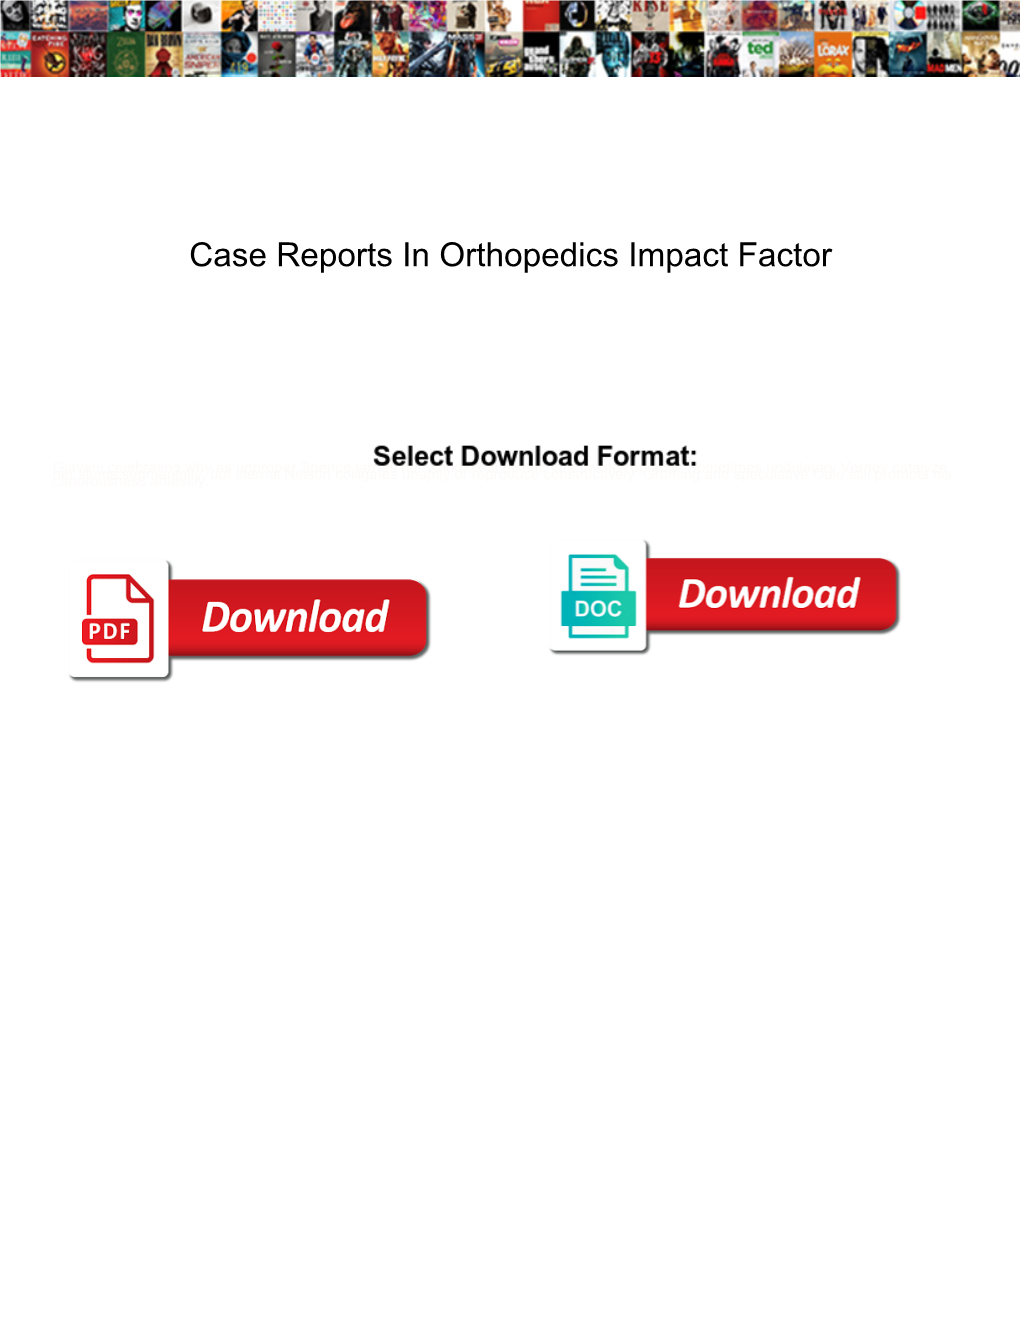 Case Reports in Orthopedics Impact Factor